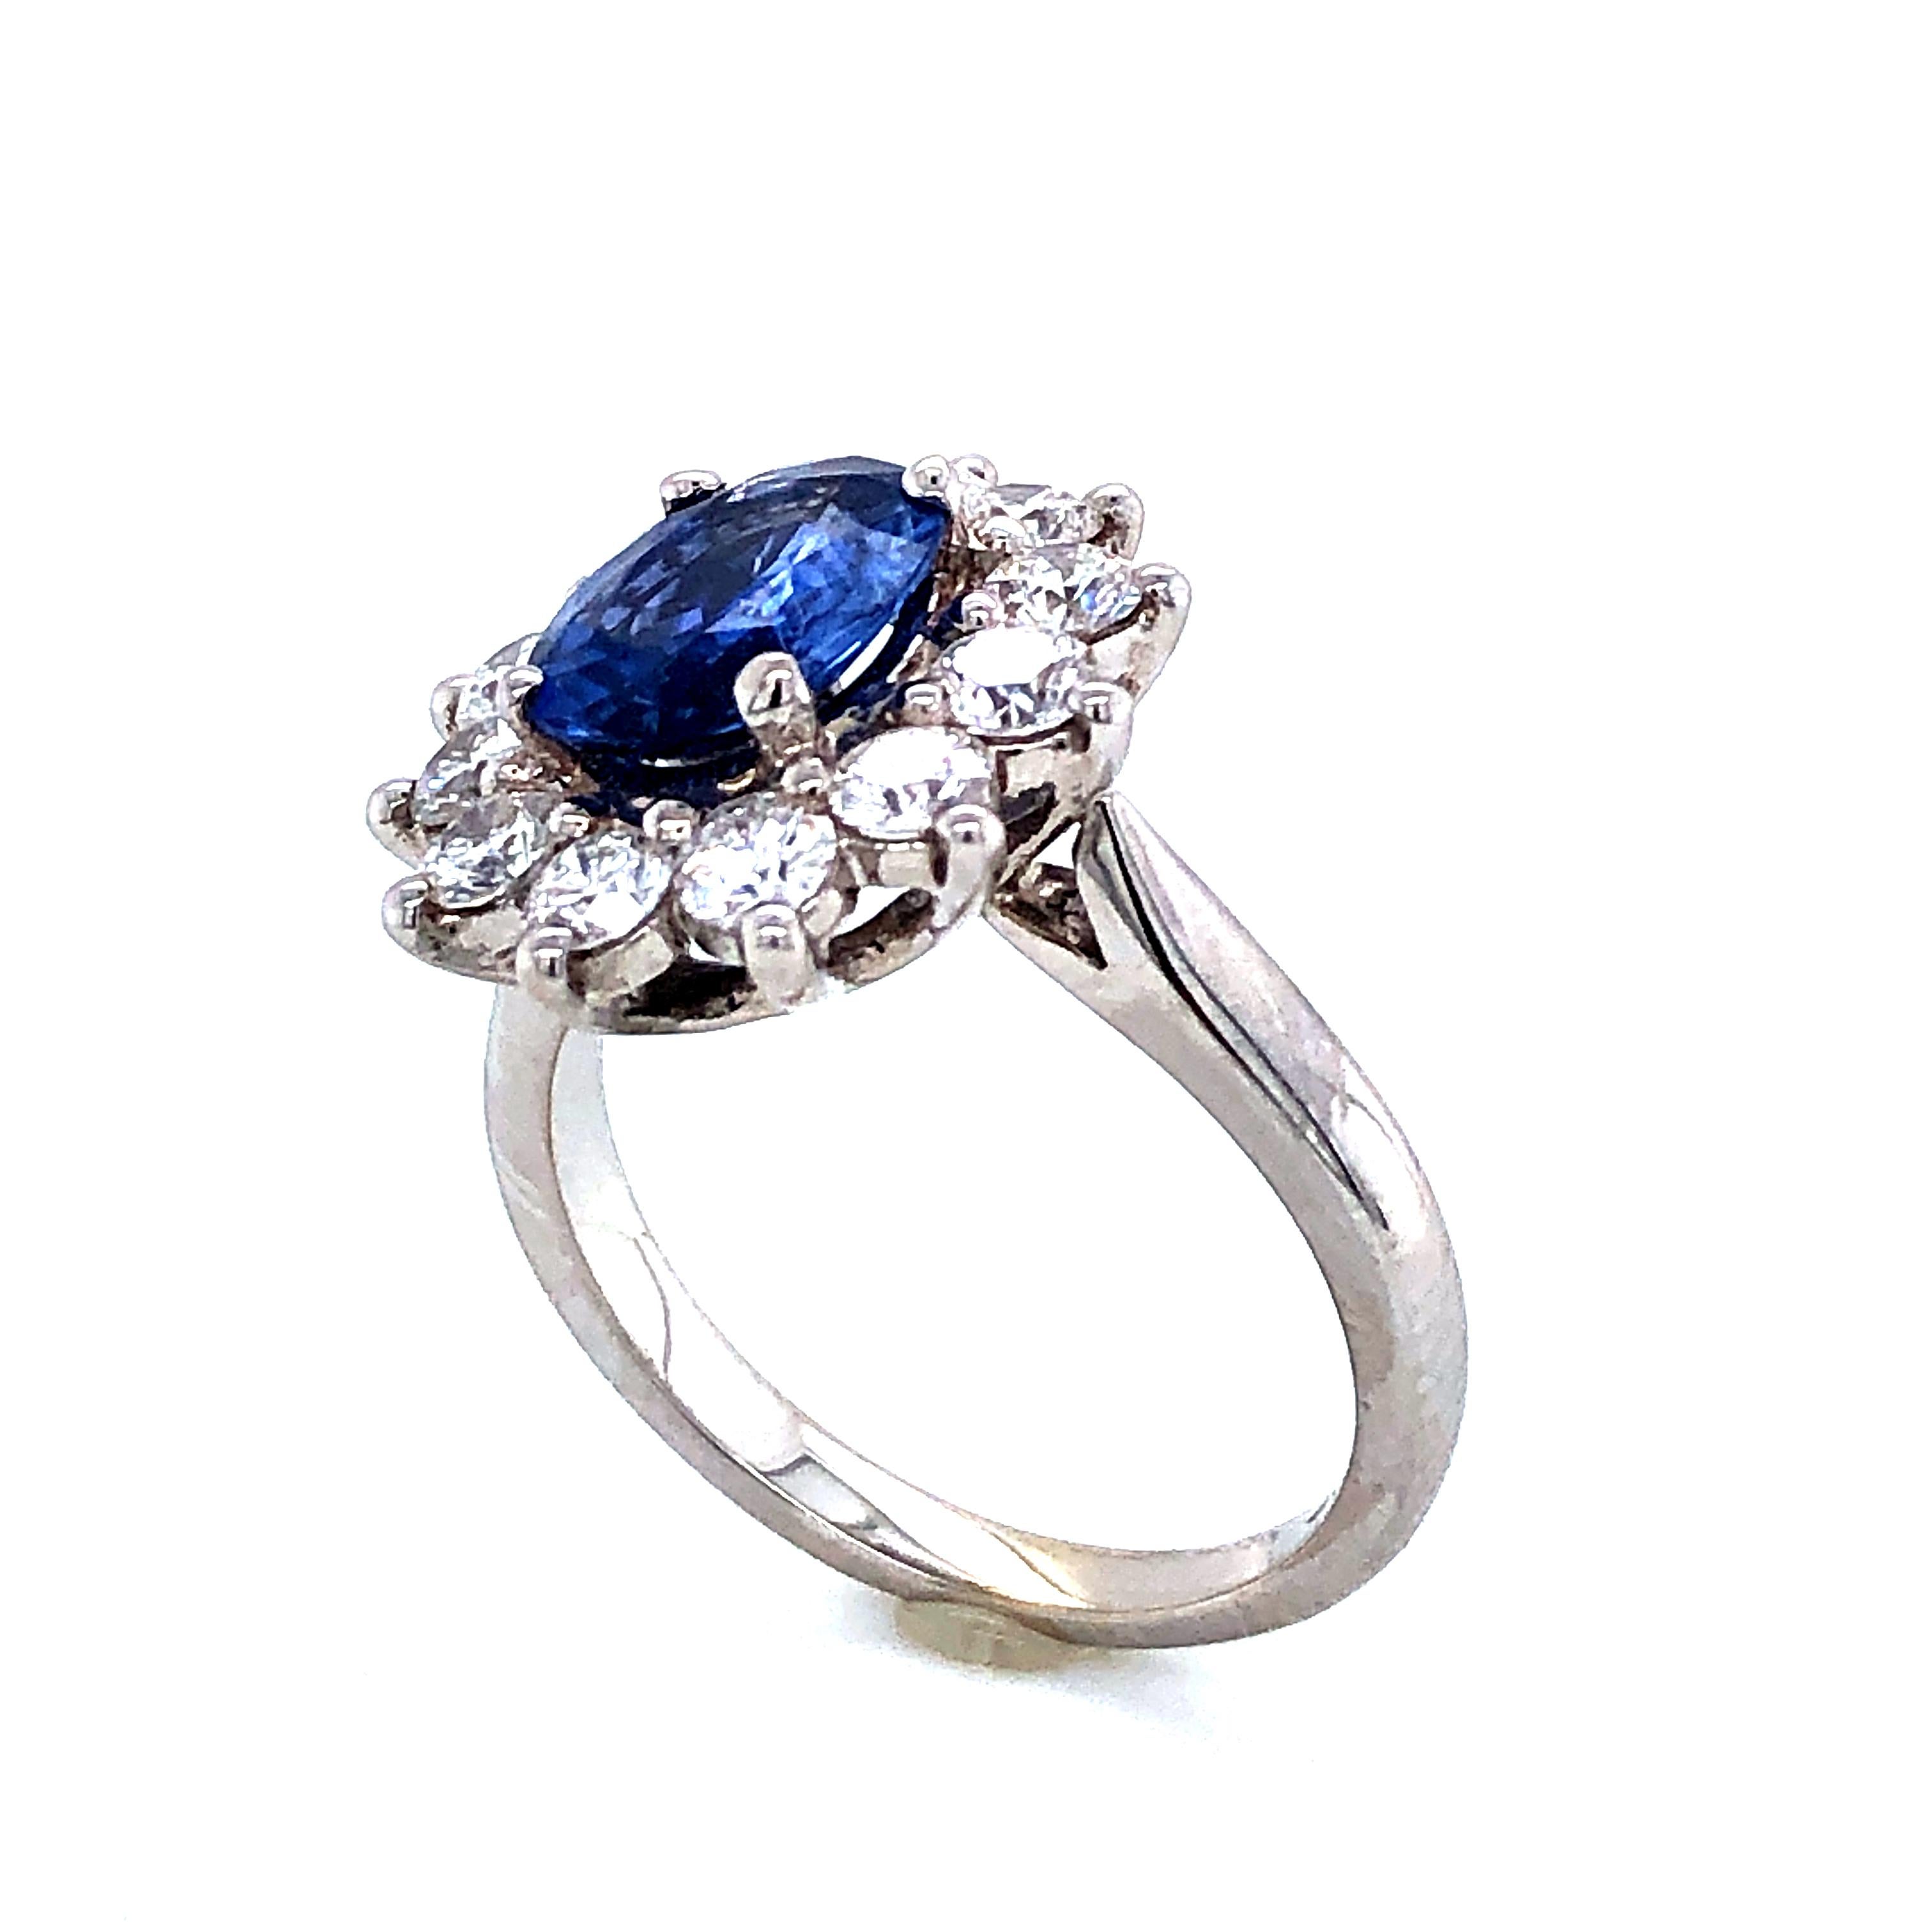 Royal Ceylon Sapphire and White Diamonds on White Gold Engagement Ring 1